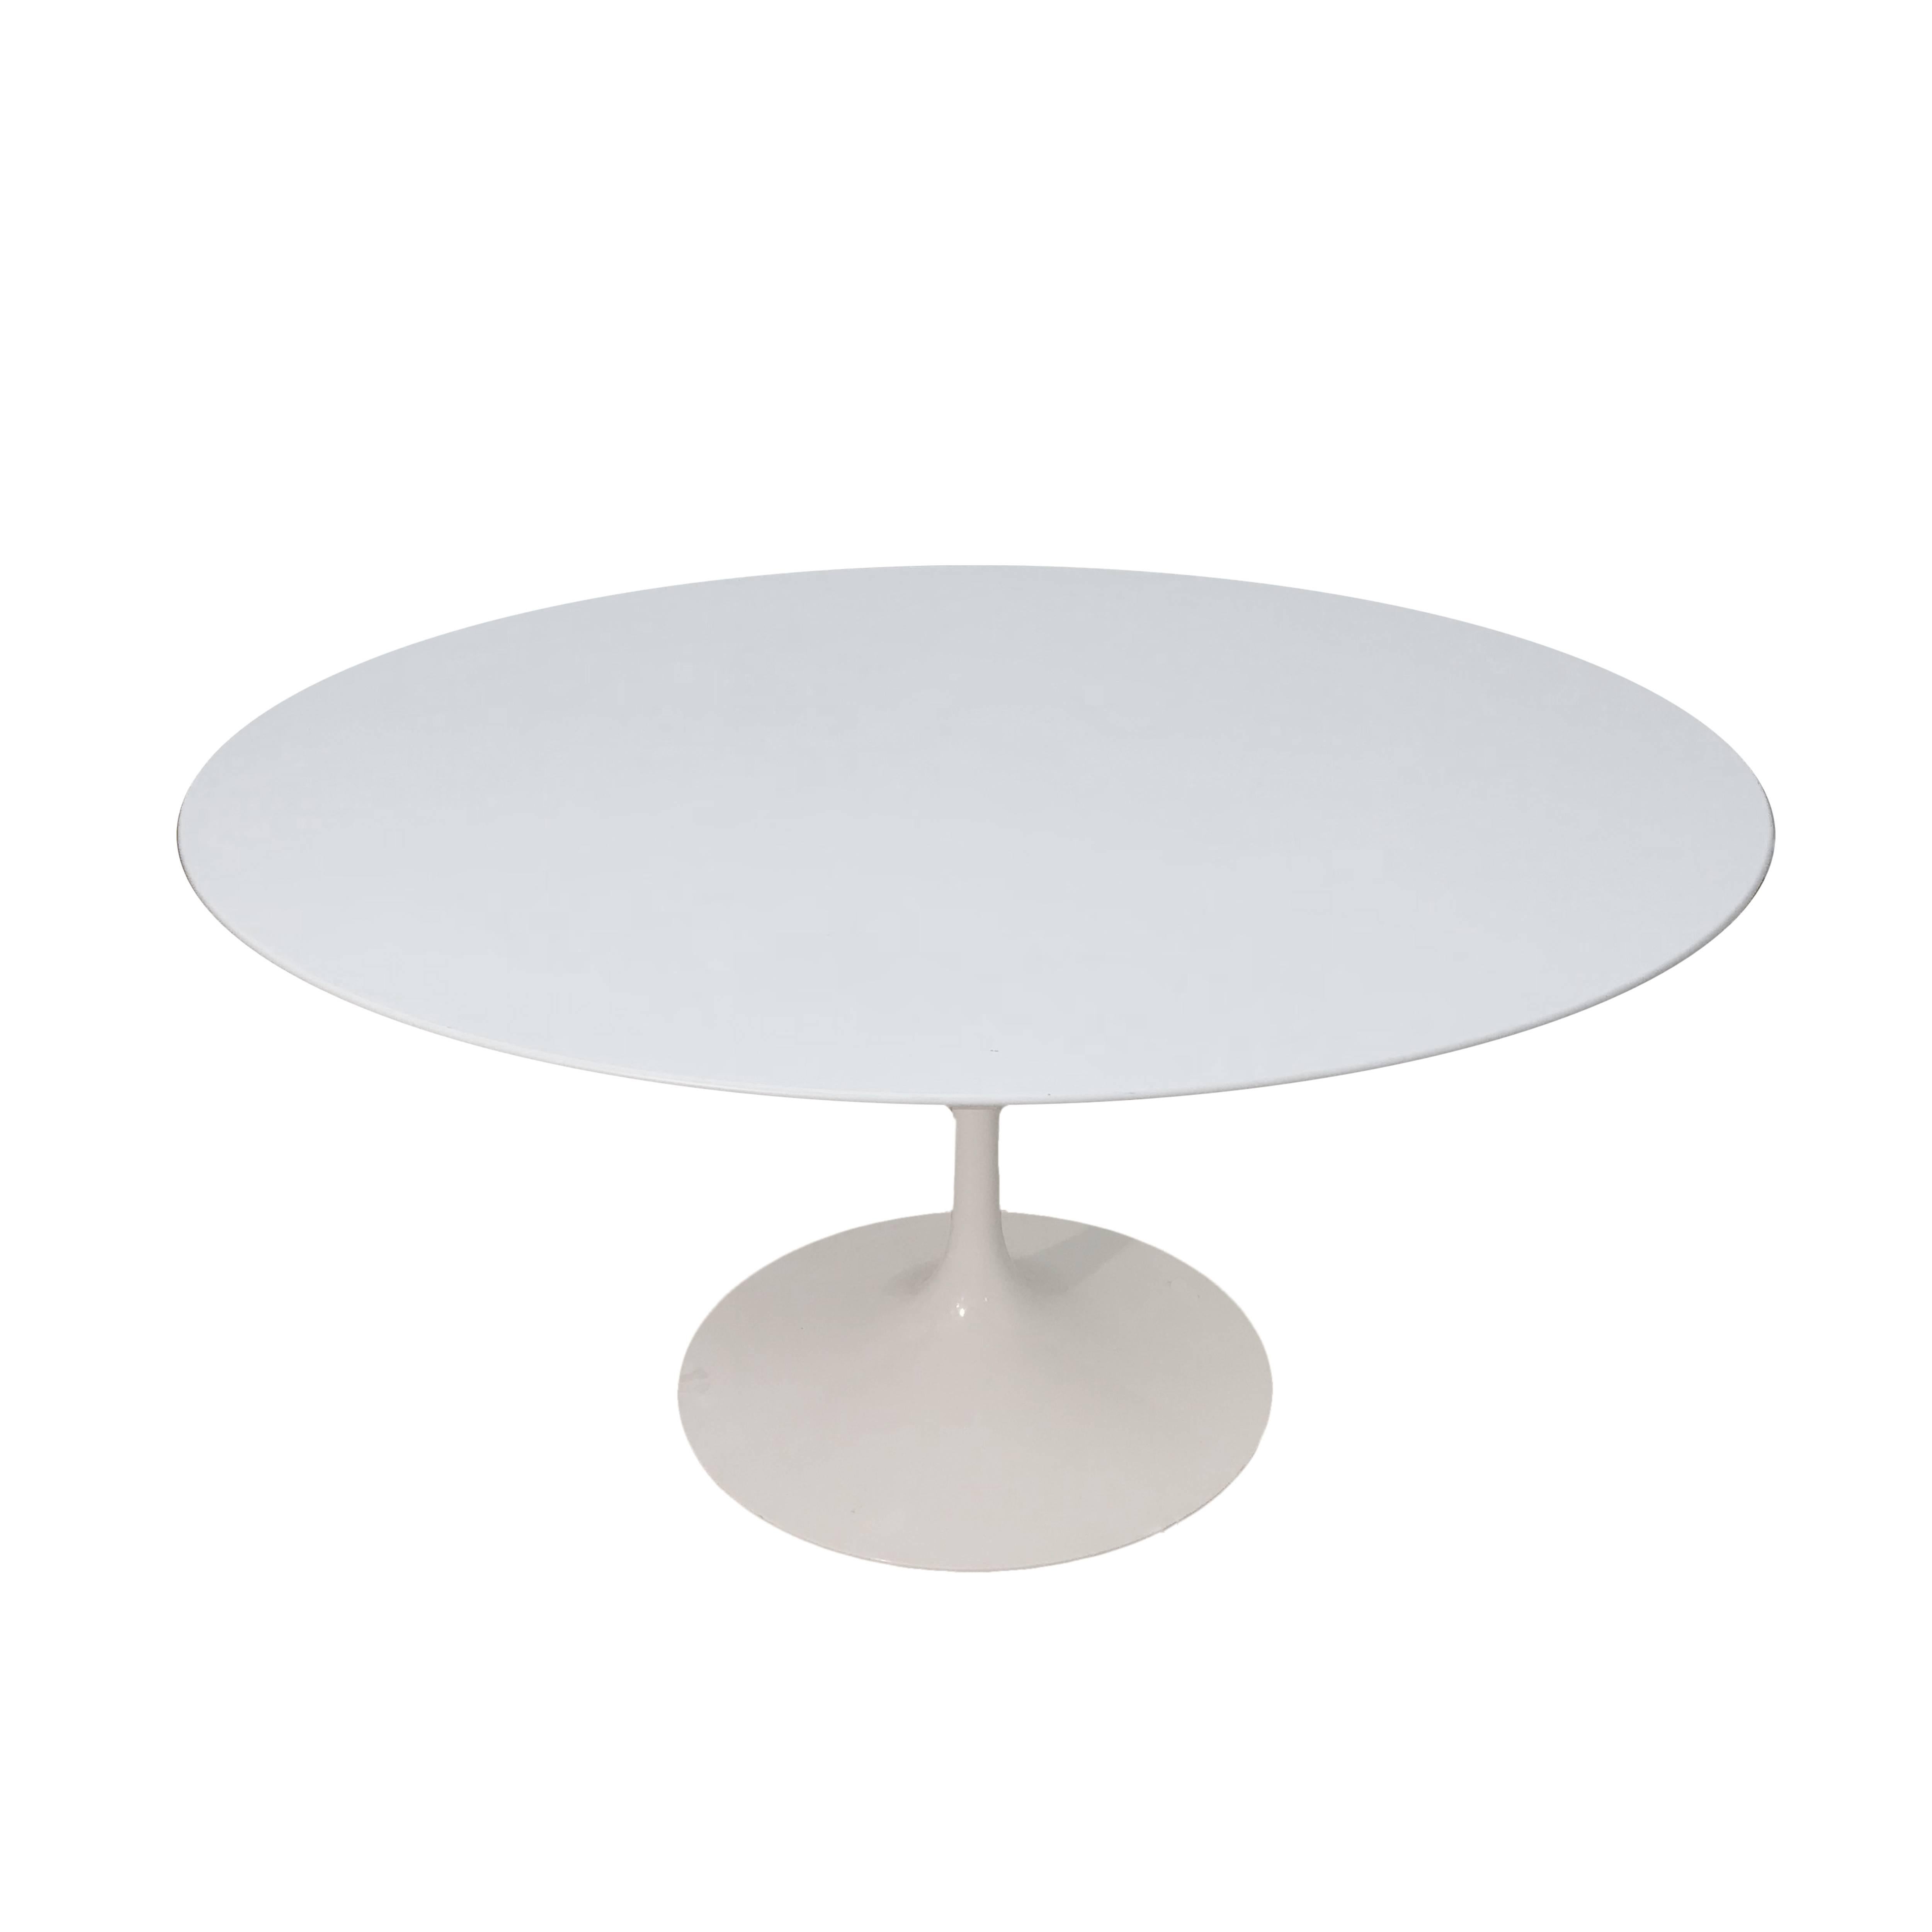 Laminated Original Tulip Table by Eero Saarinen Signed Knoll Studio, Round Table